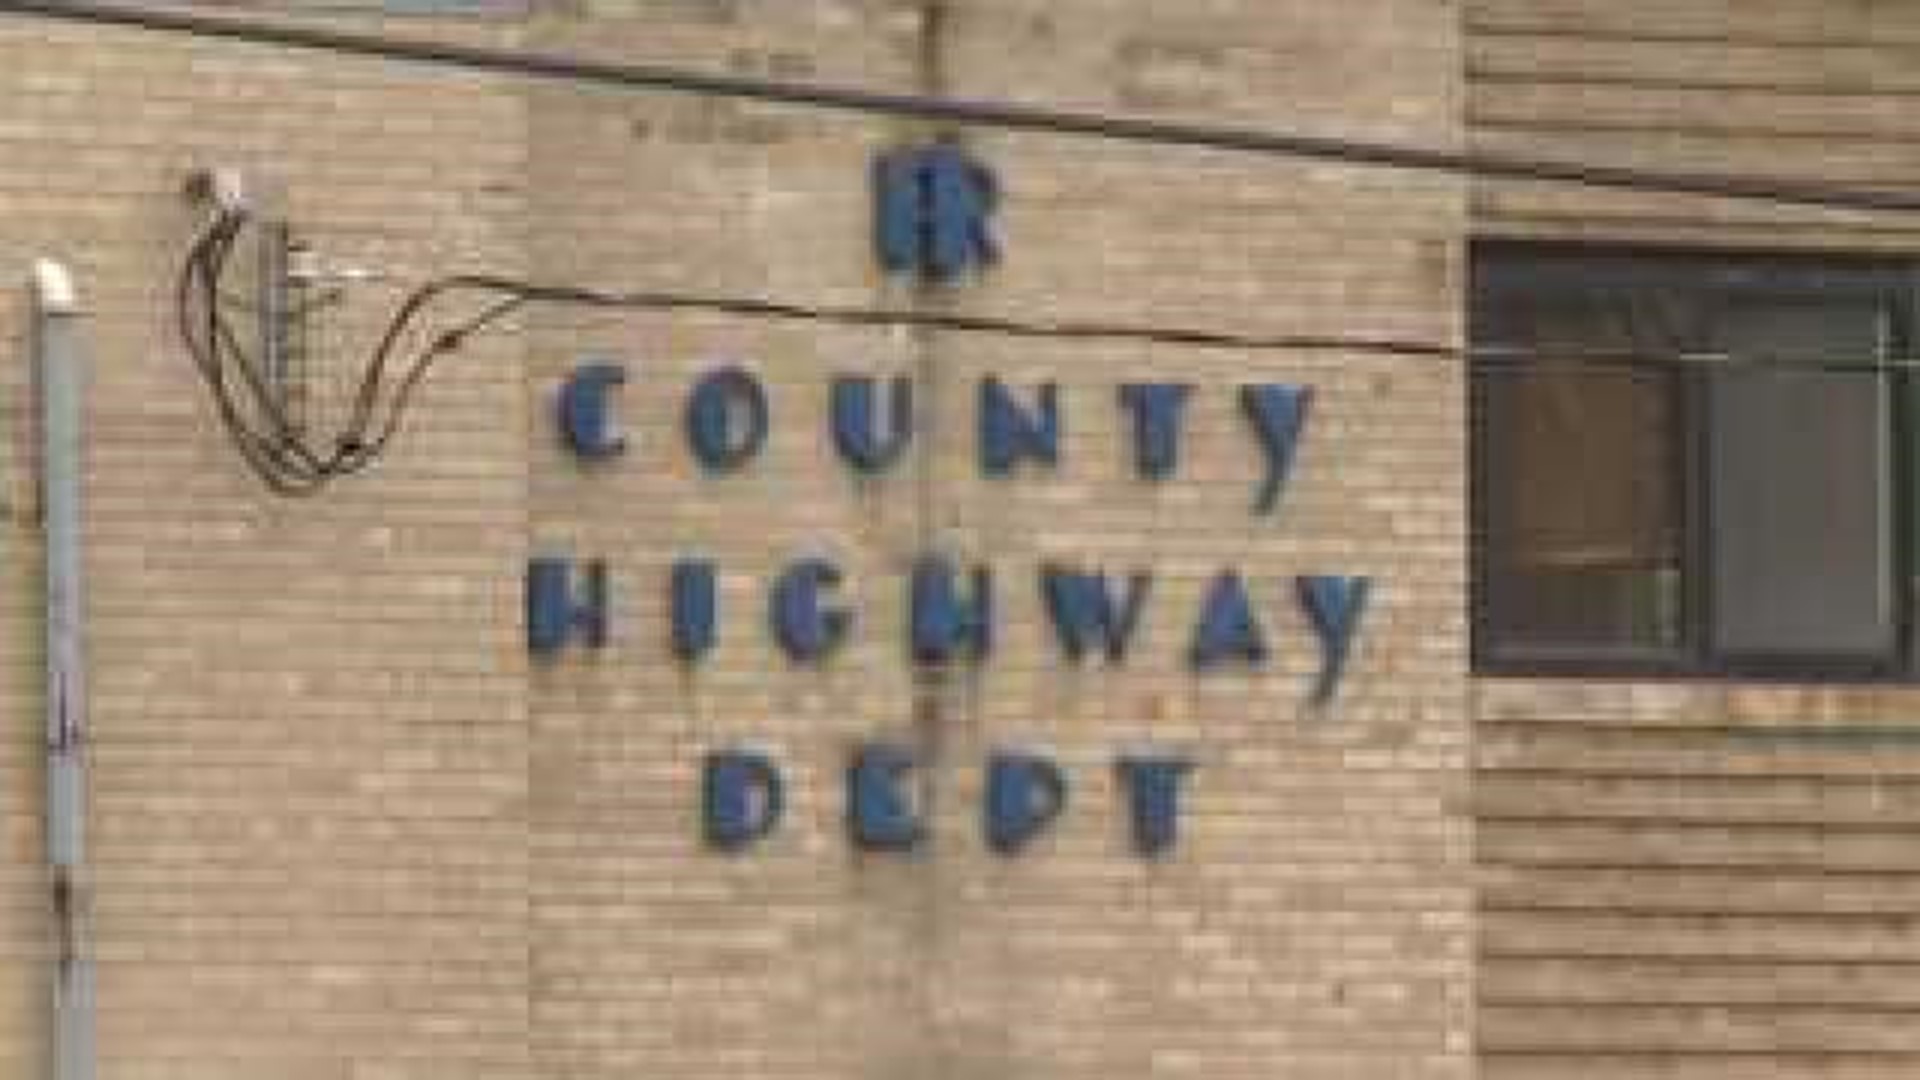 County Highway Dept. investigation